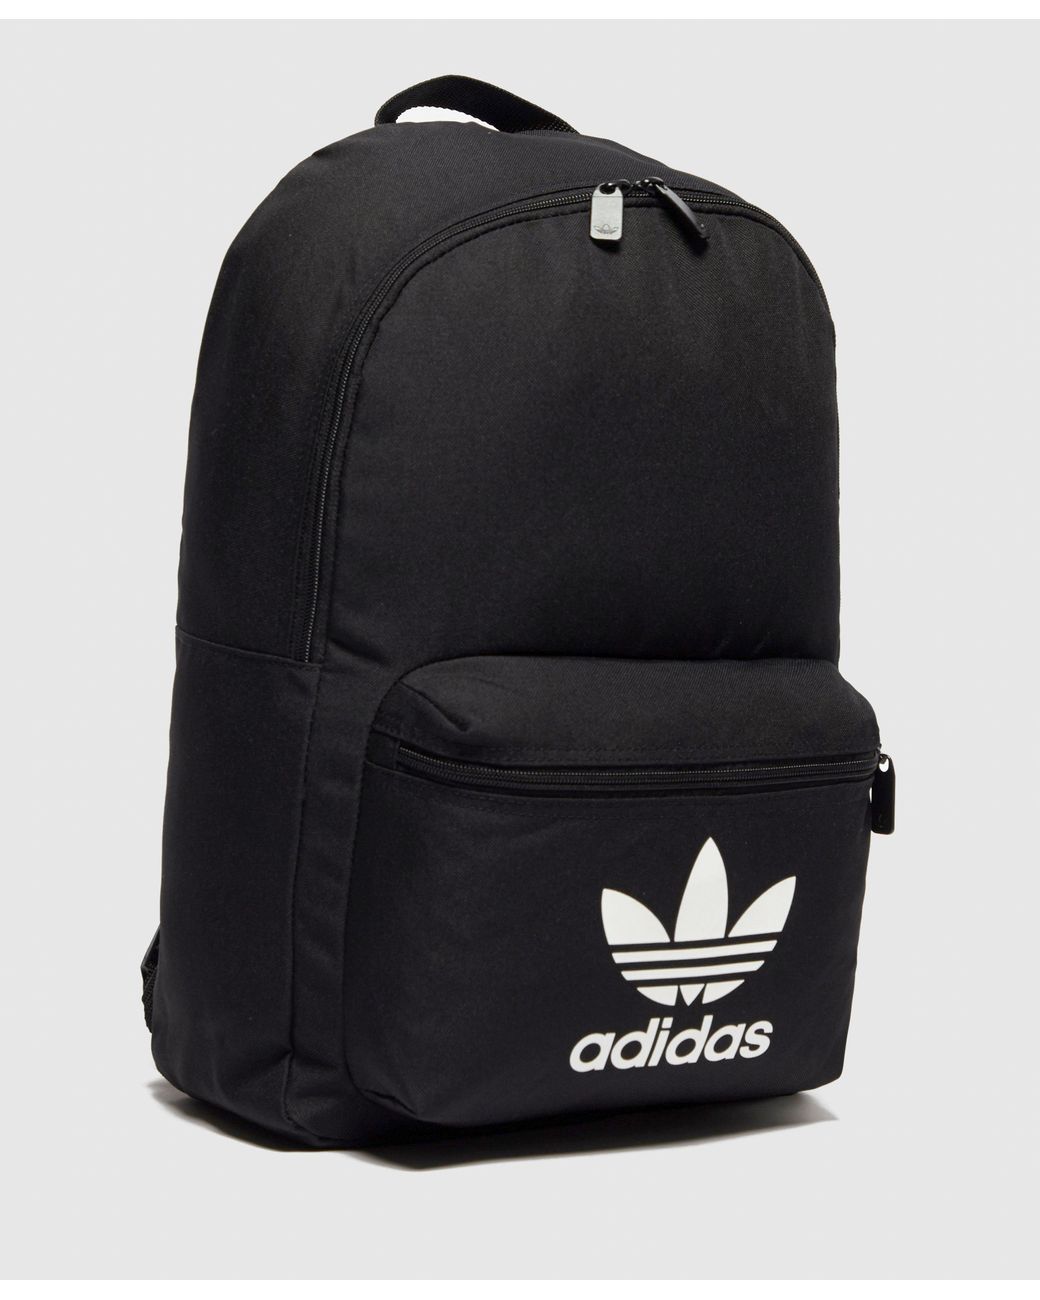 adidas black classic backpack